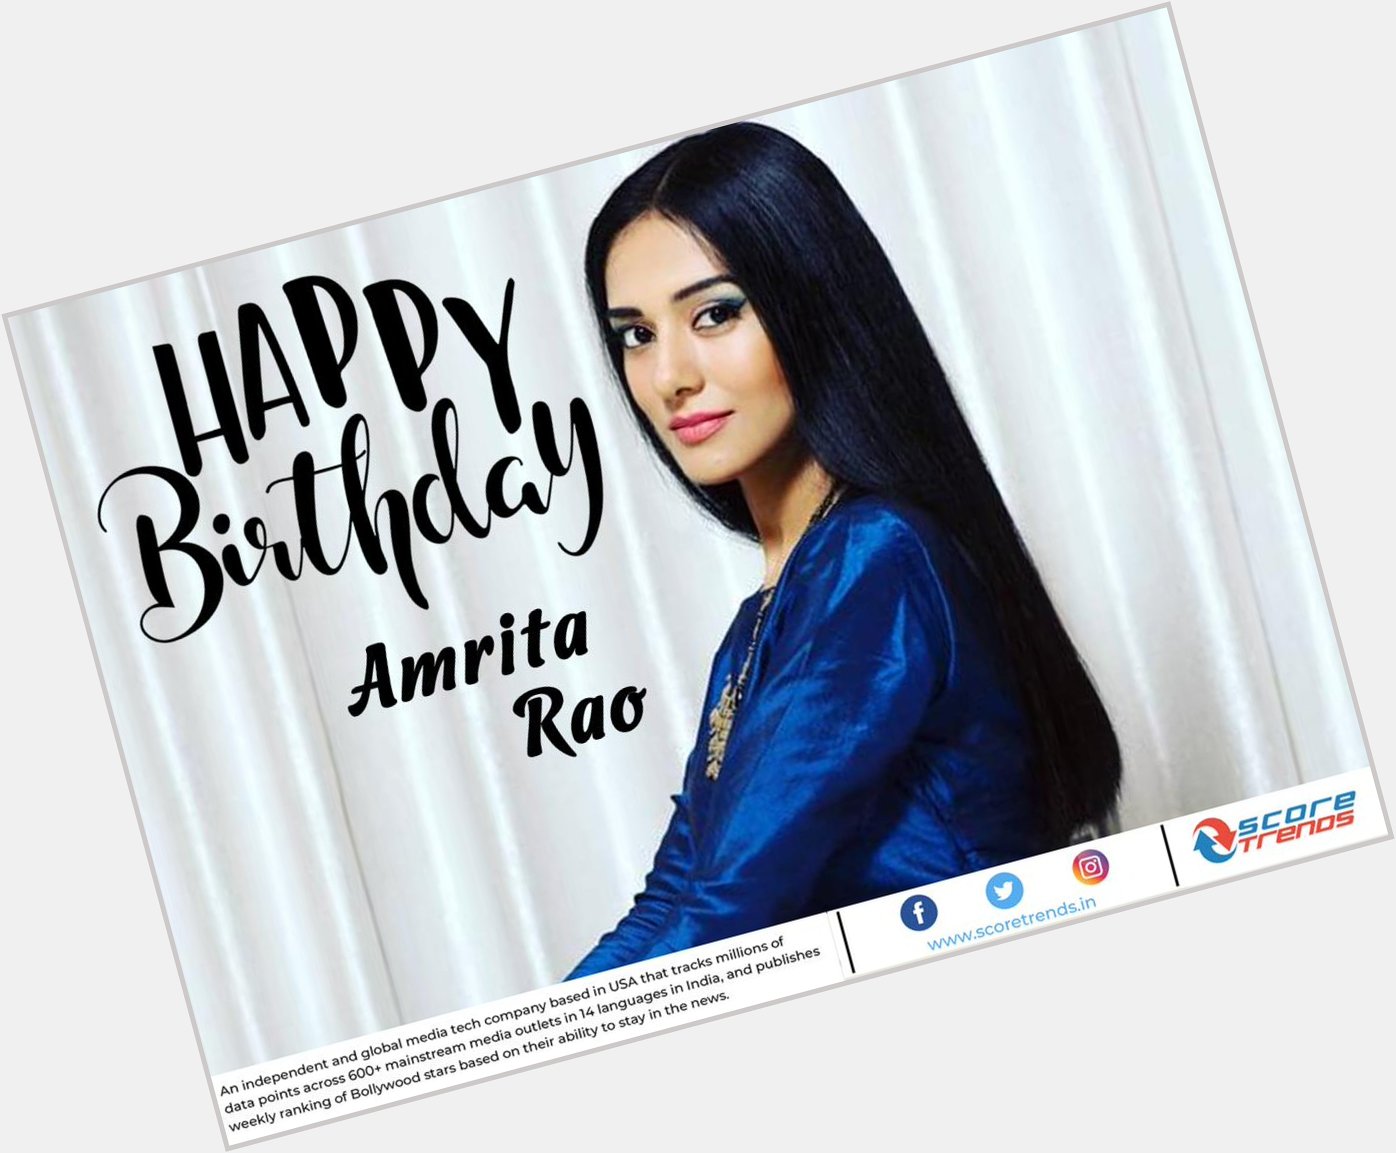 Score Trends wishes Amrita Rao a Happy Birthday!! 